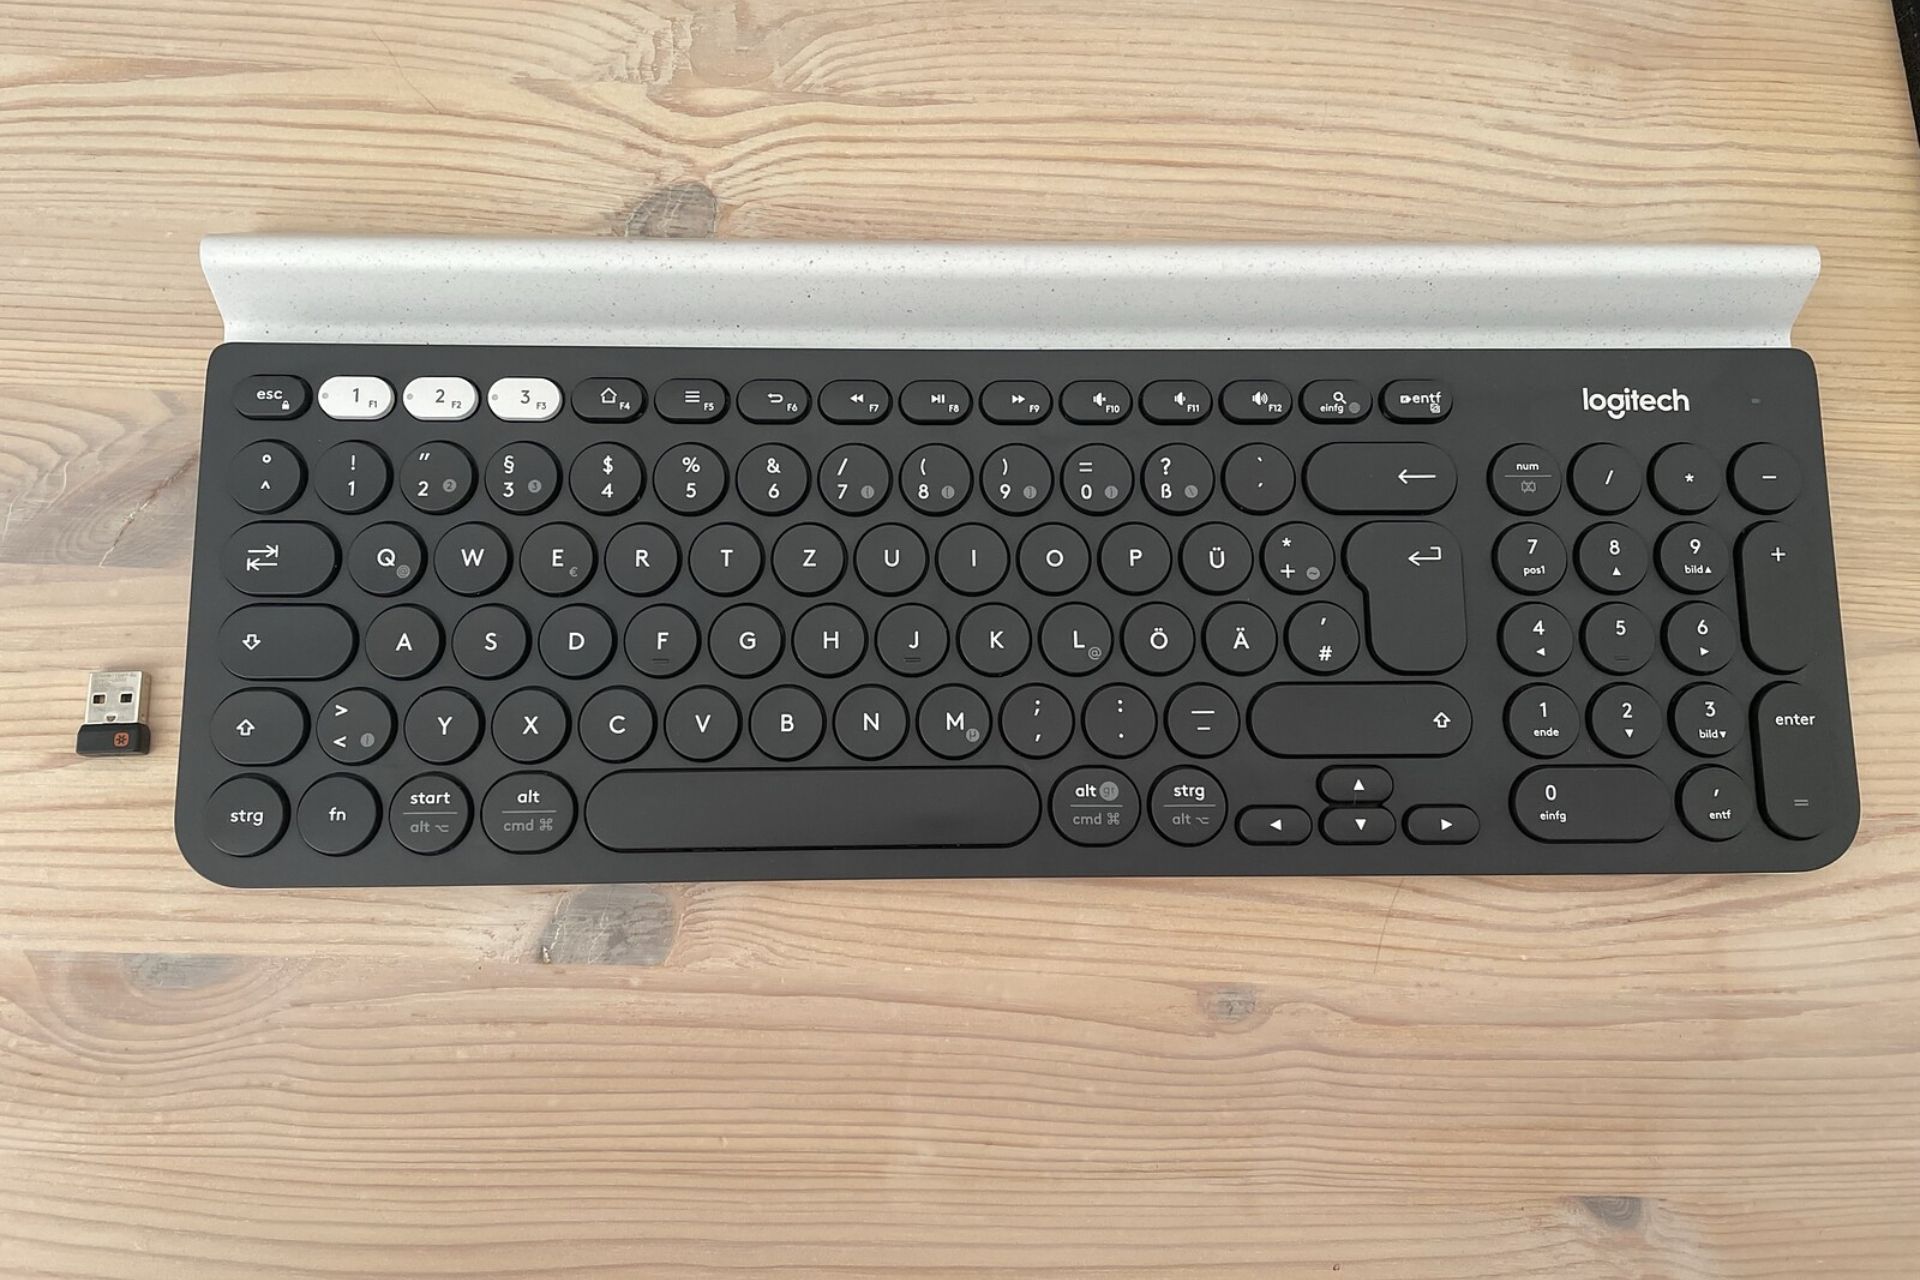 3 Ways to Fix your Logitech k780 Keyboard When it's Not Working